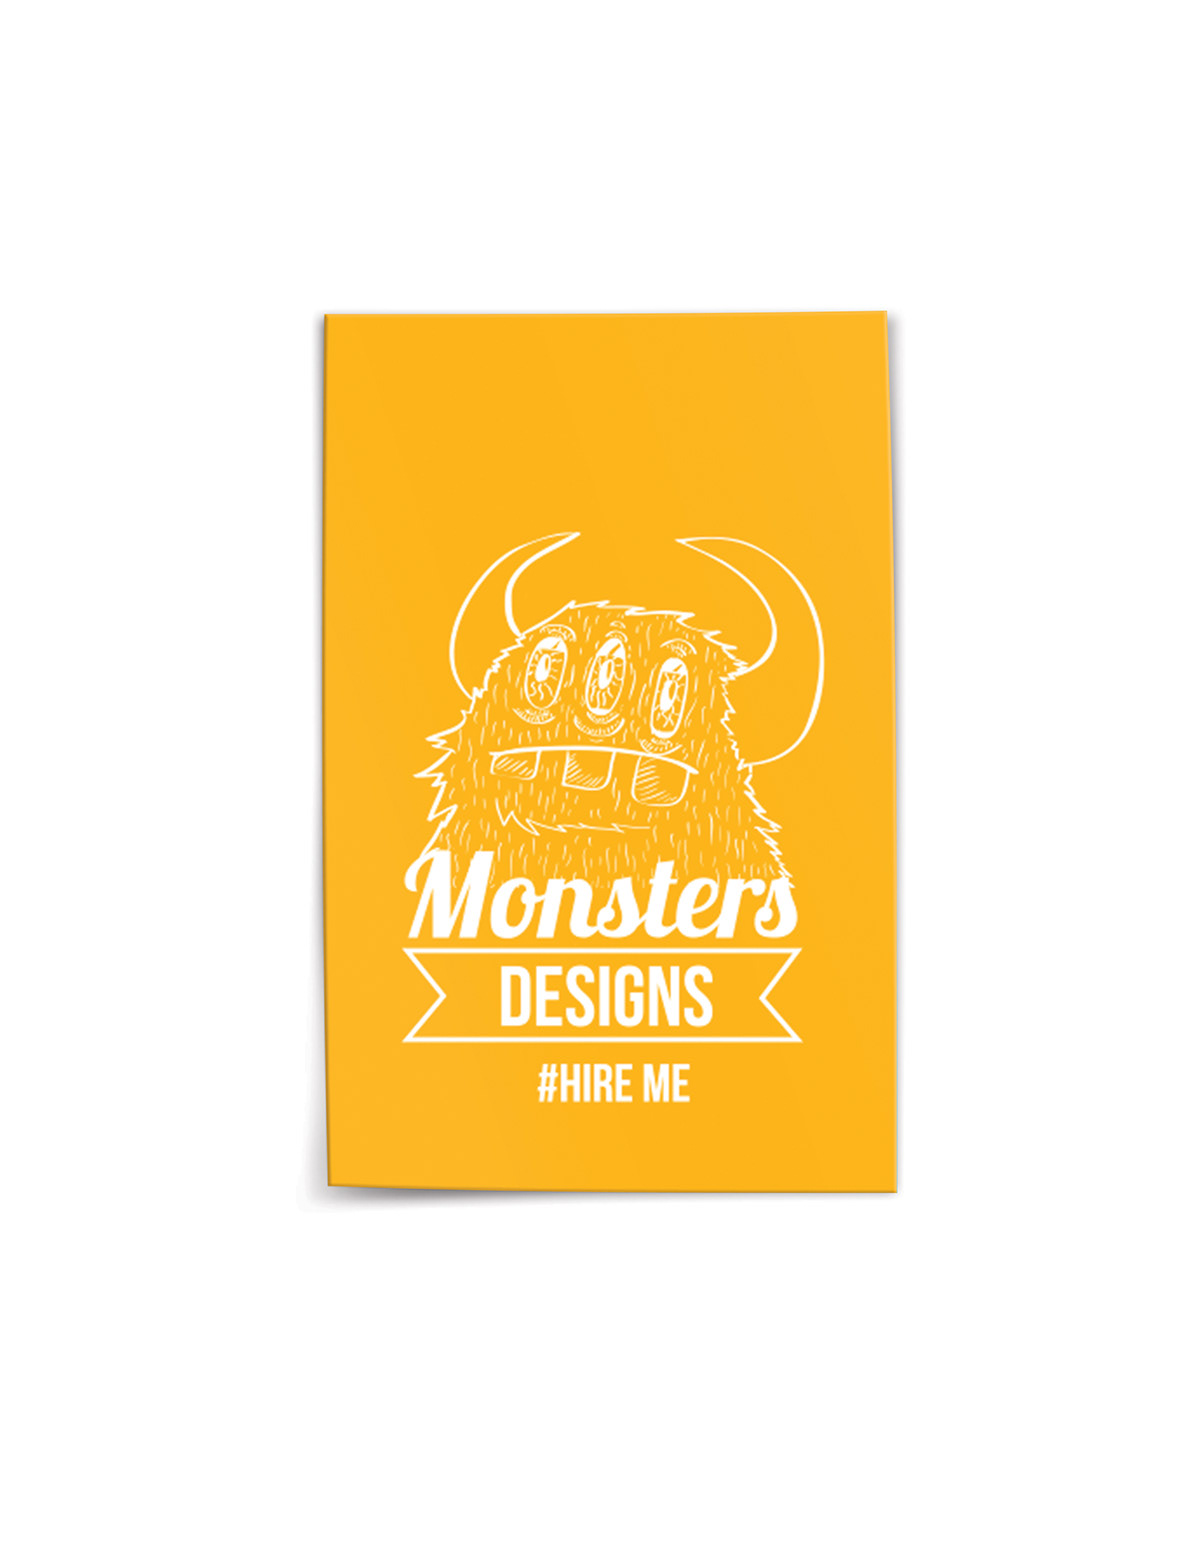 Omokhare Iruoje hamburger Business Cards monsters brand Freelance